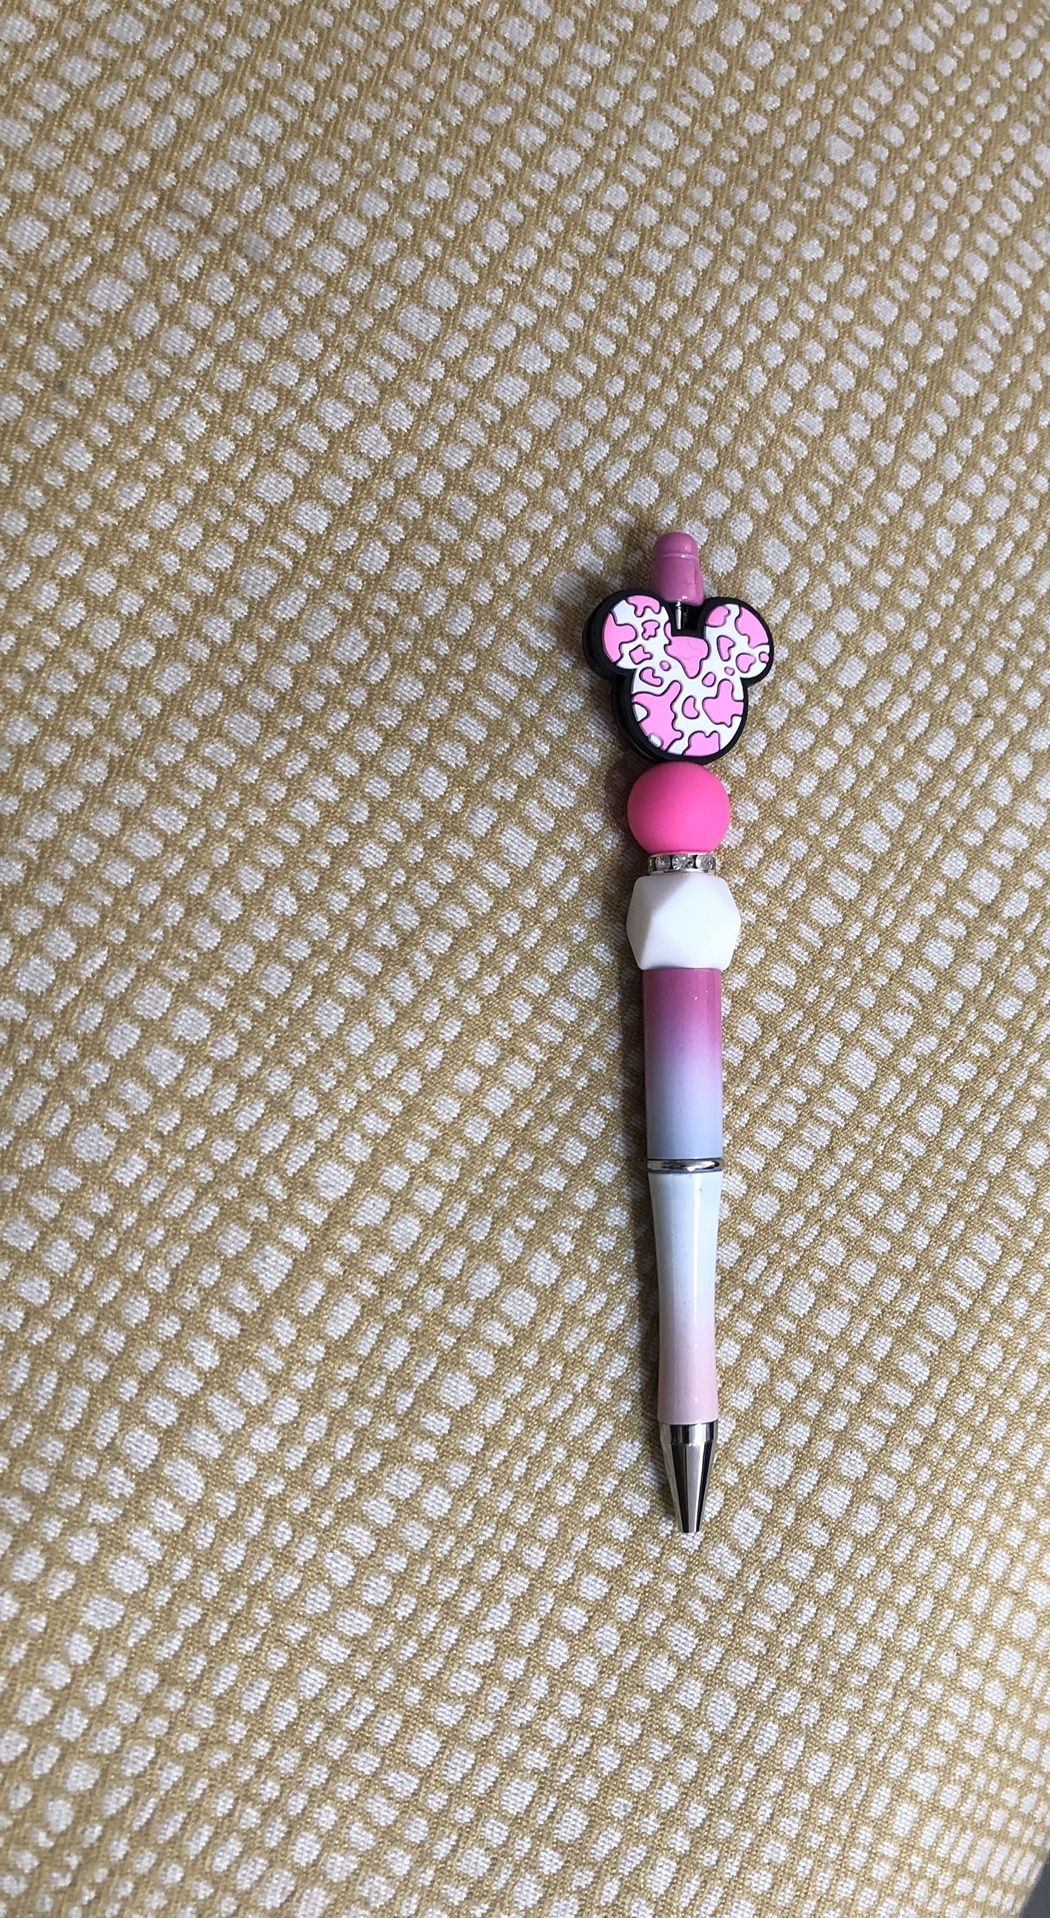 Disney Minnie Mouse beads pen pink purple . 6”LX 1” W